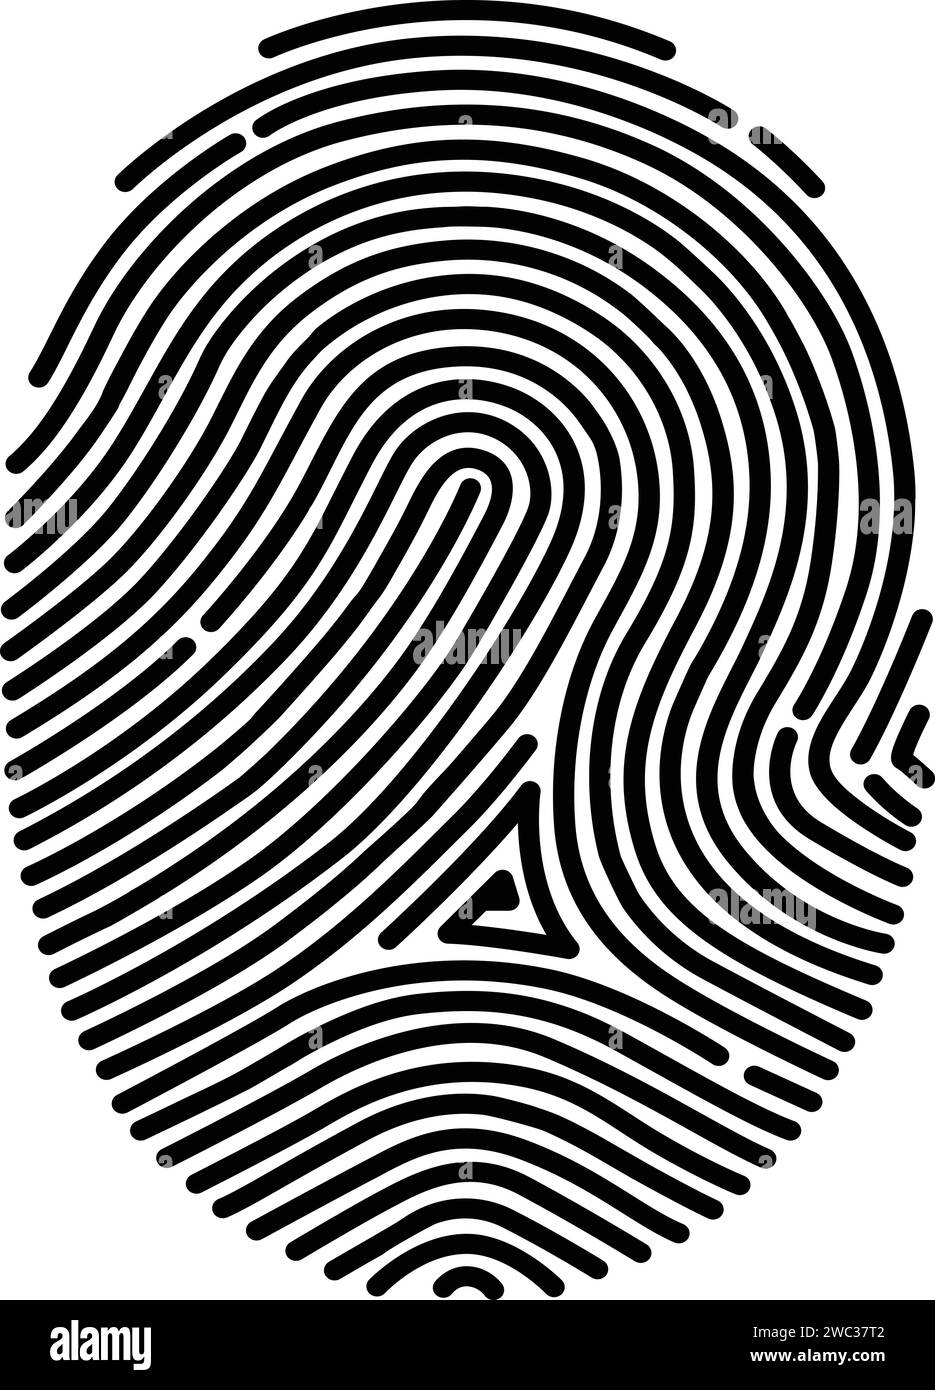 Fingerabdruck, Fingerscan, Fingeridentifikation, Digital Biometrisch Stock Vektor